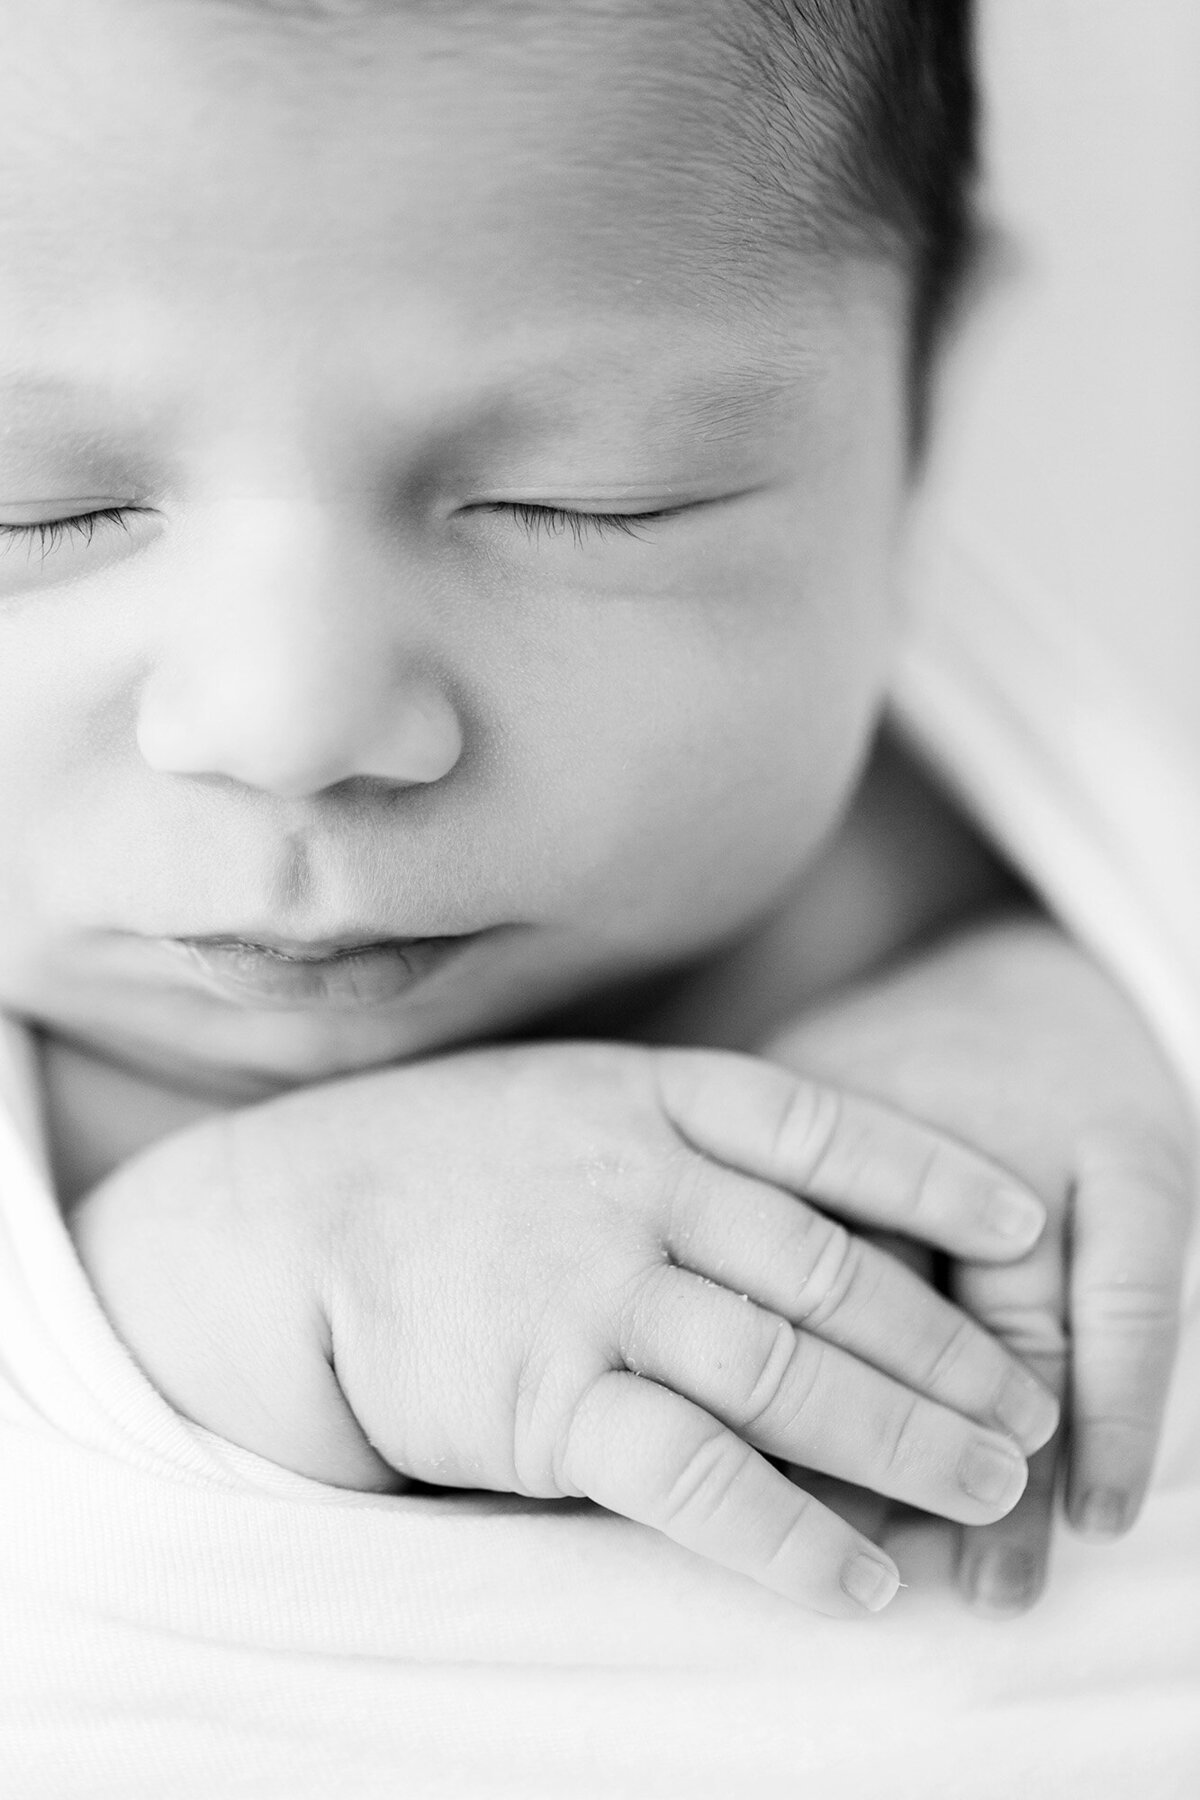 Julie Brock, Lousiville KY newborn photographer, takes photo of sleeping newborn baby at her St Matthews Studio